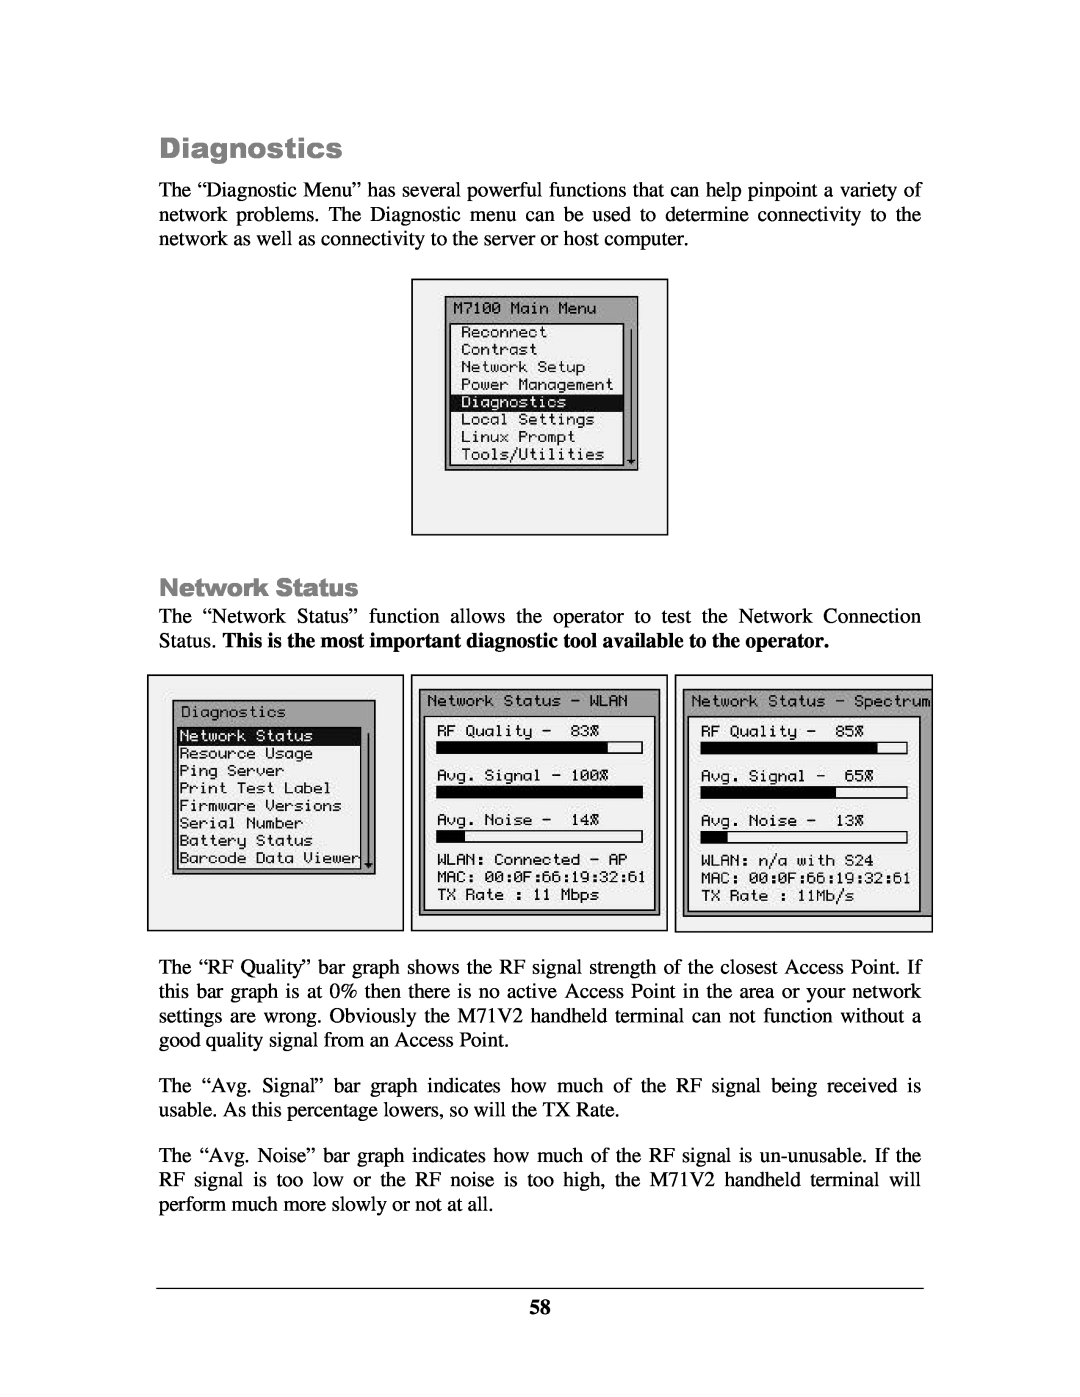 IBM M71V2 manual Diagnostics, Network Status 